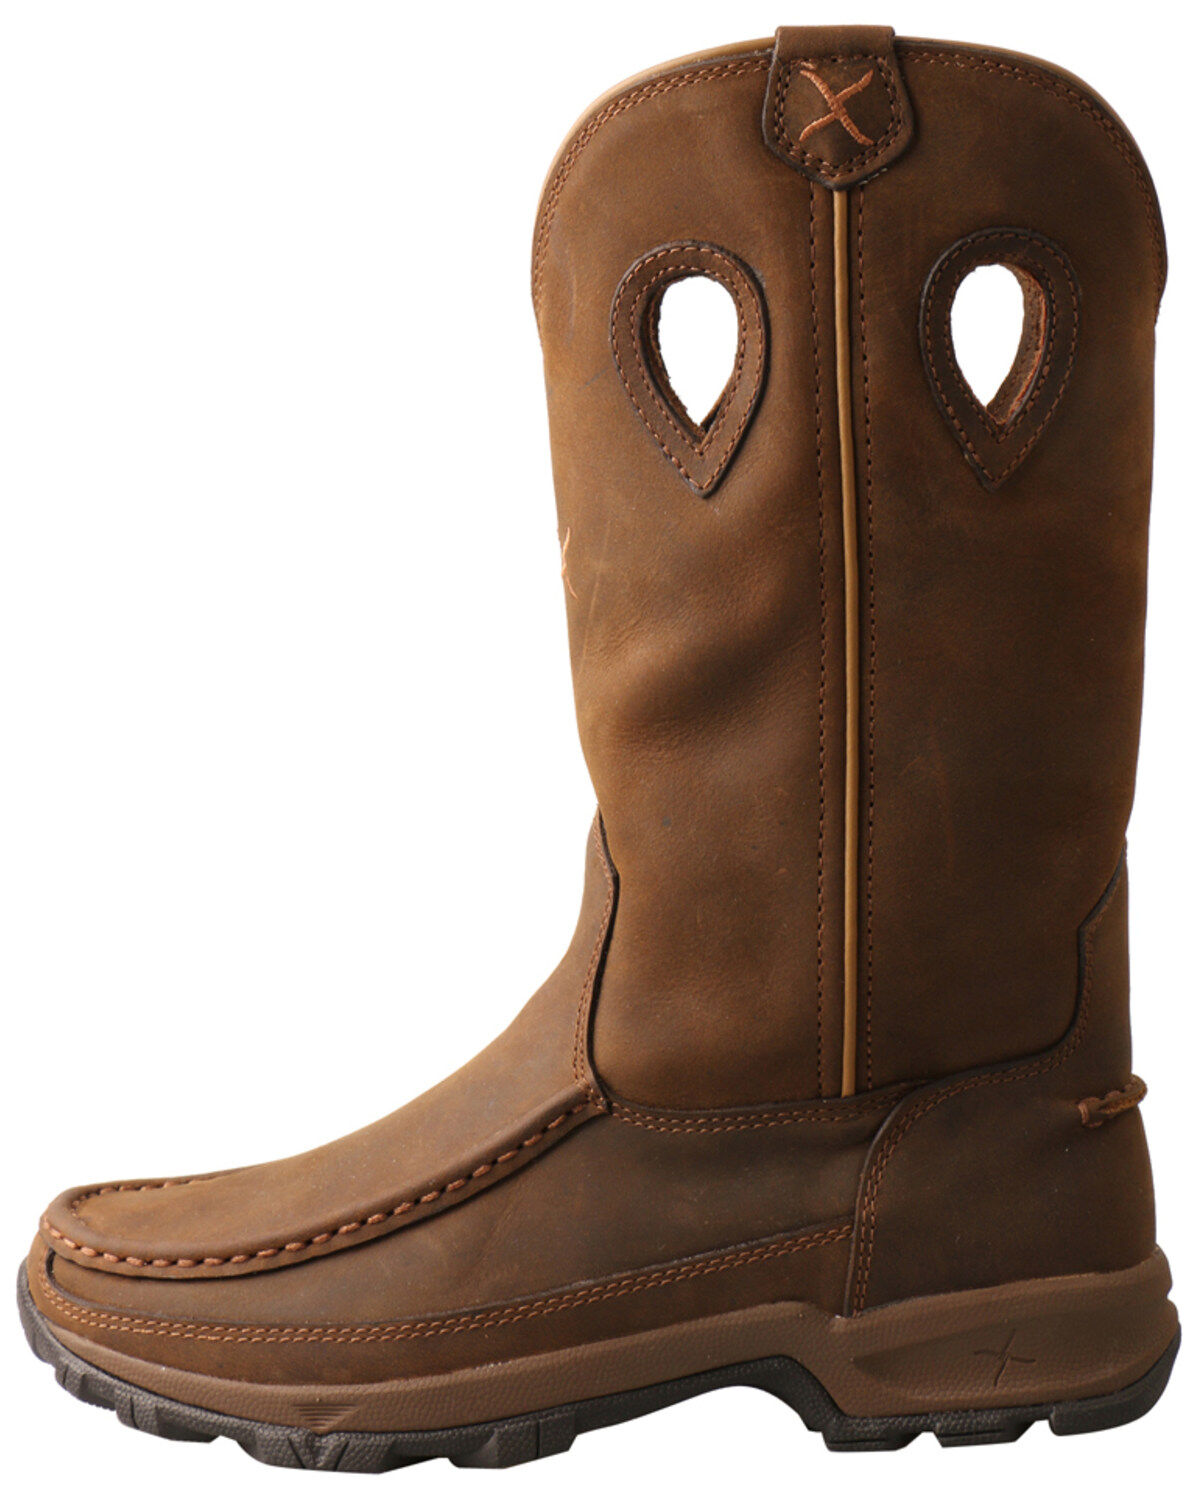 Hiker Western Boots - Moc Toe | Boot Barn